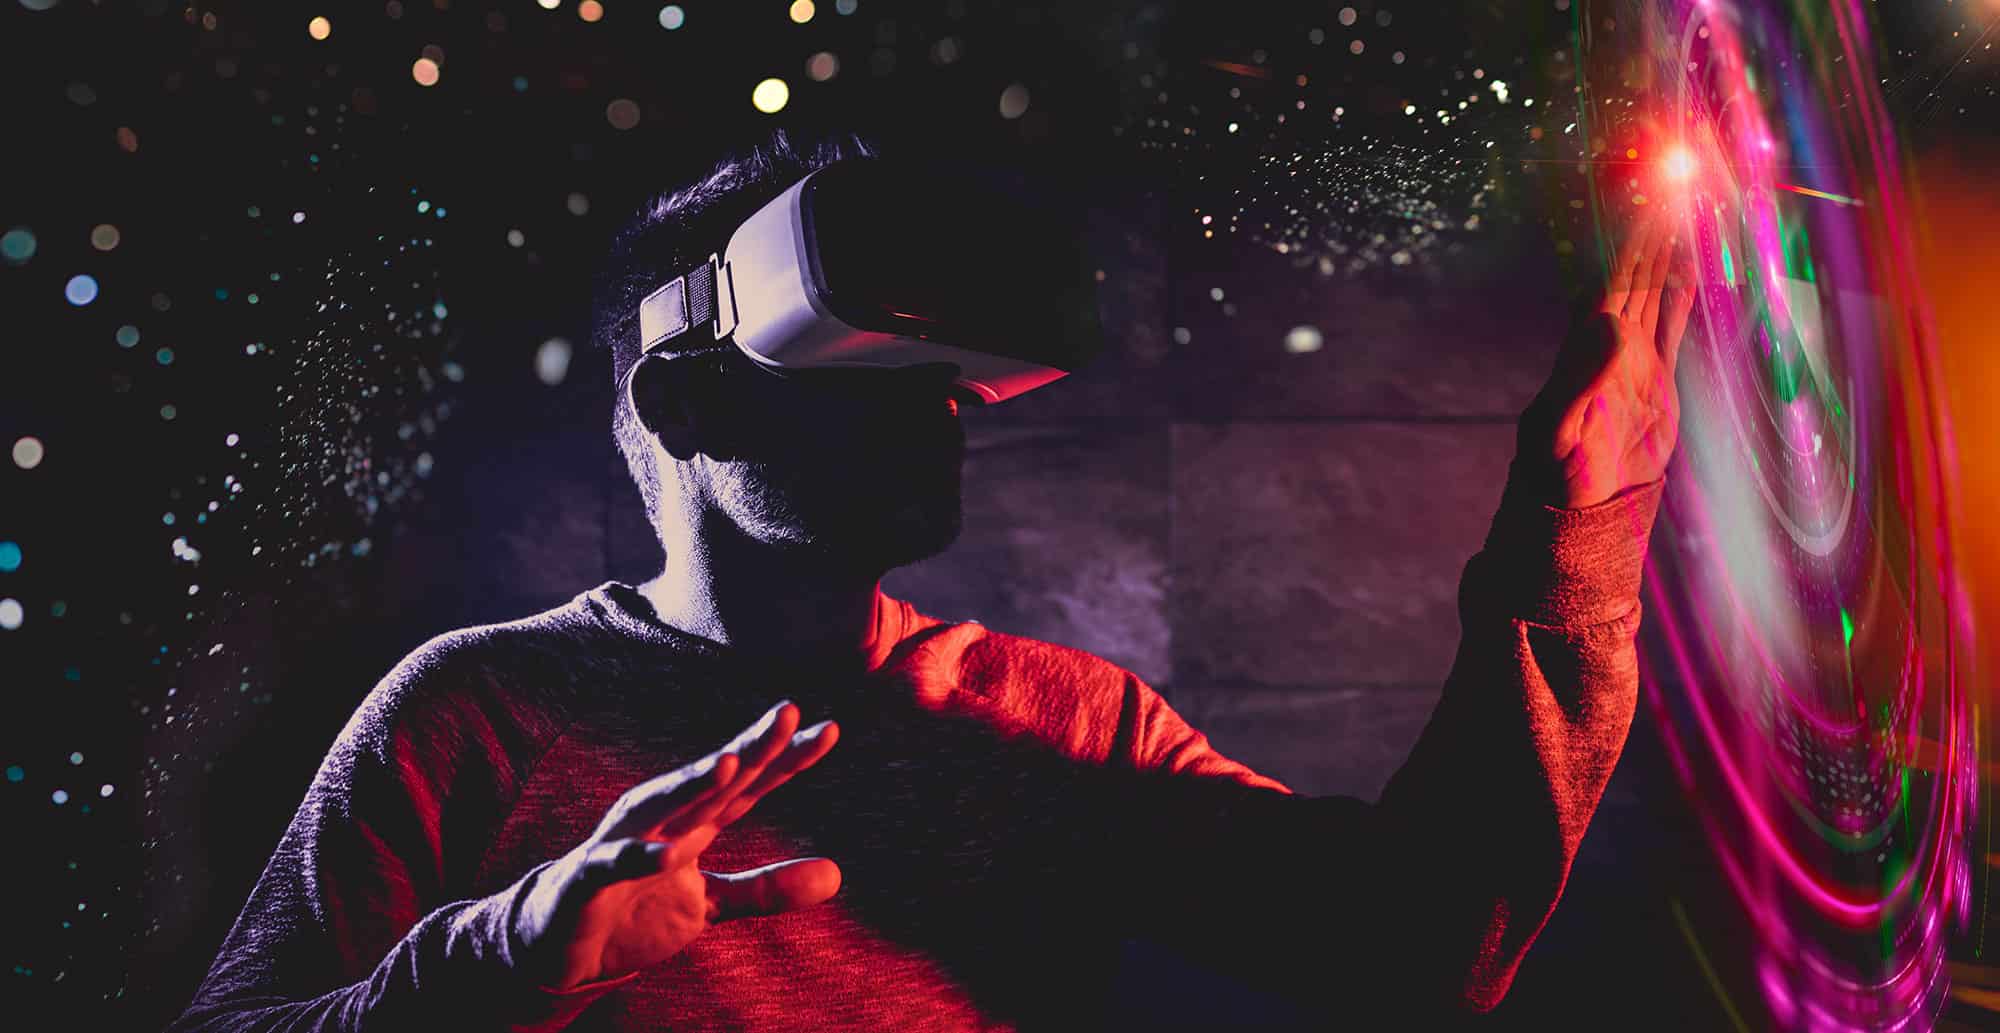 creator that pioneered virtual reality